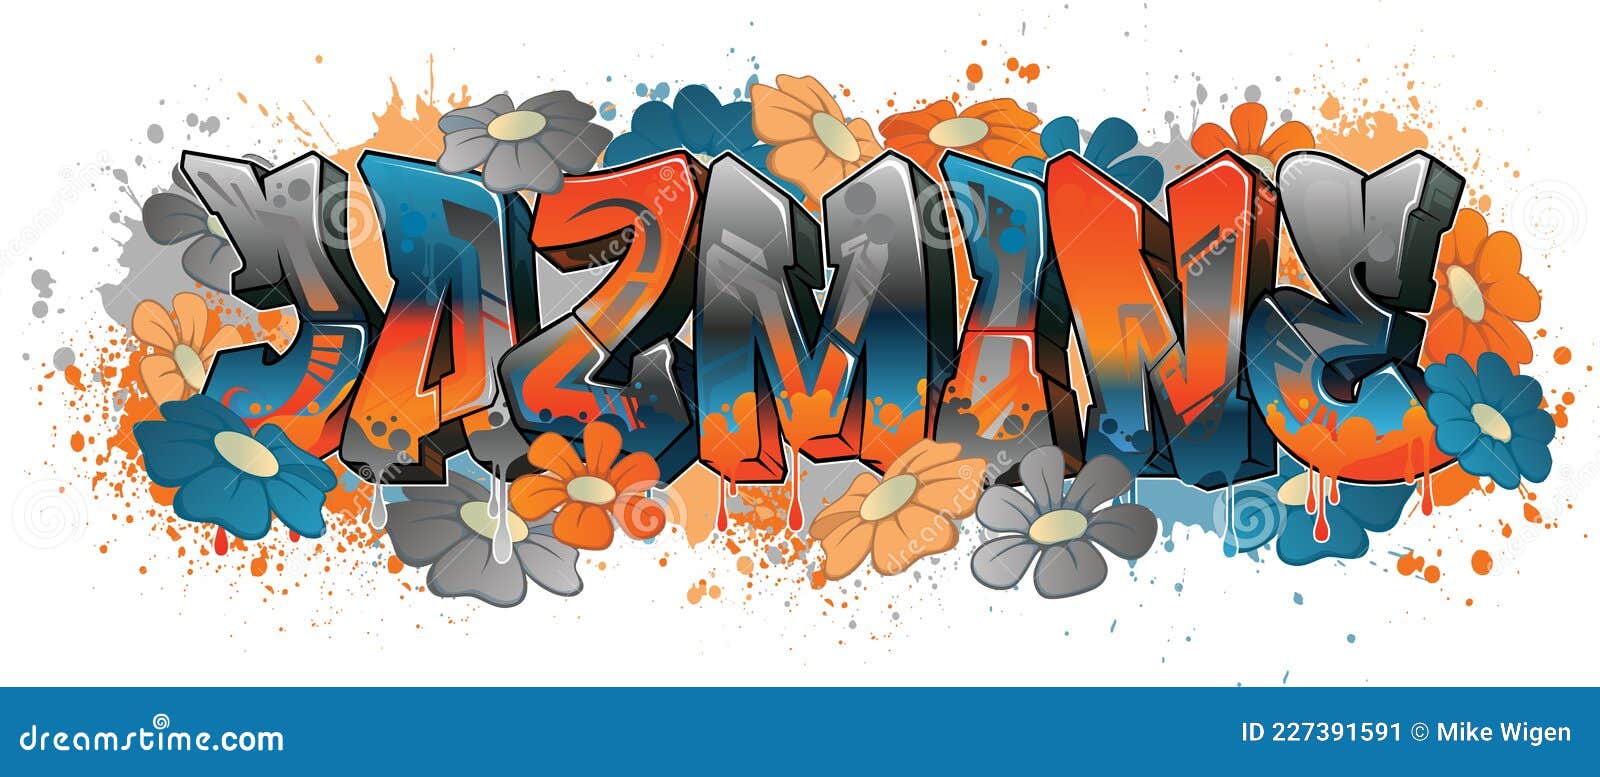 graffiti styled name  - jazmine